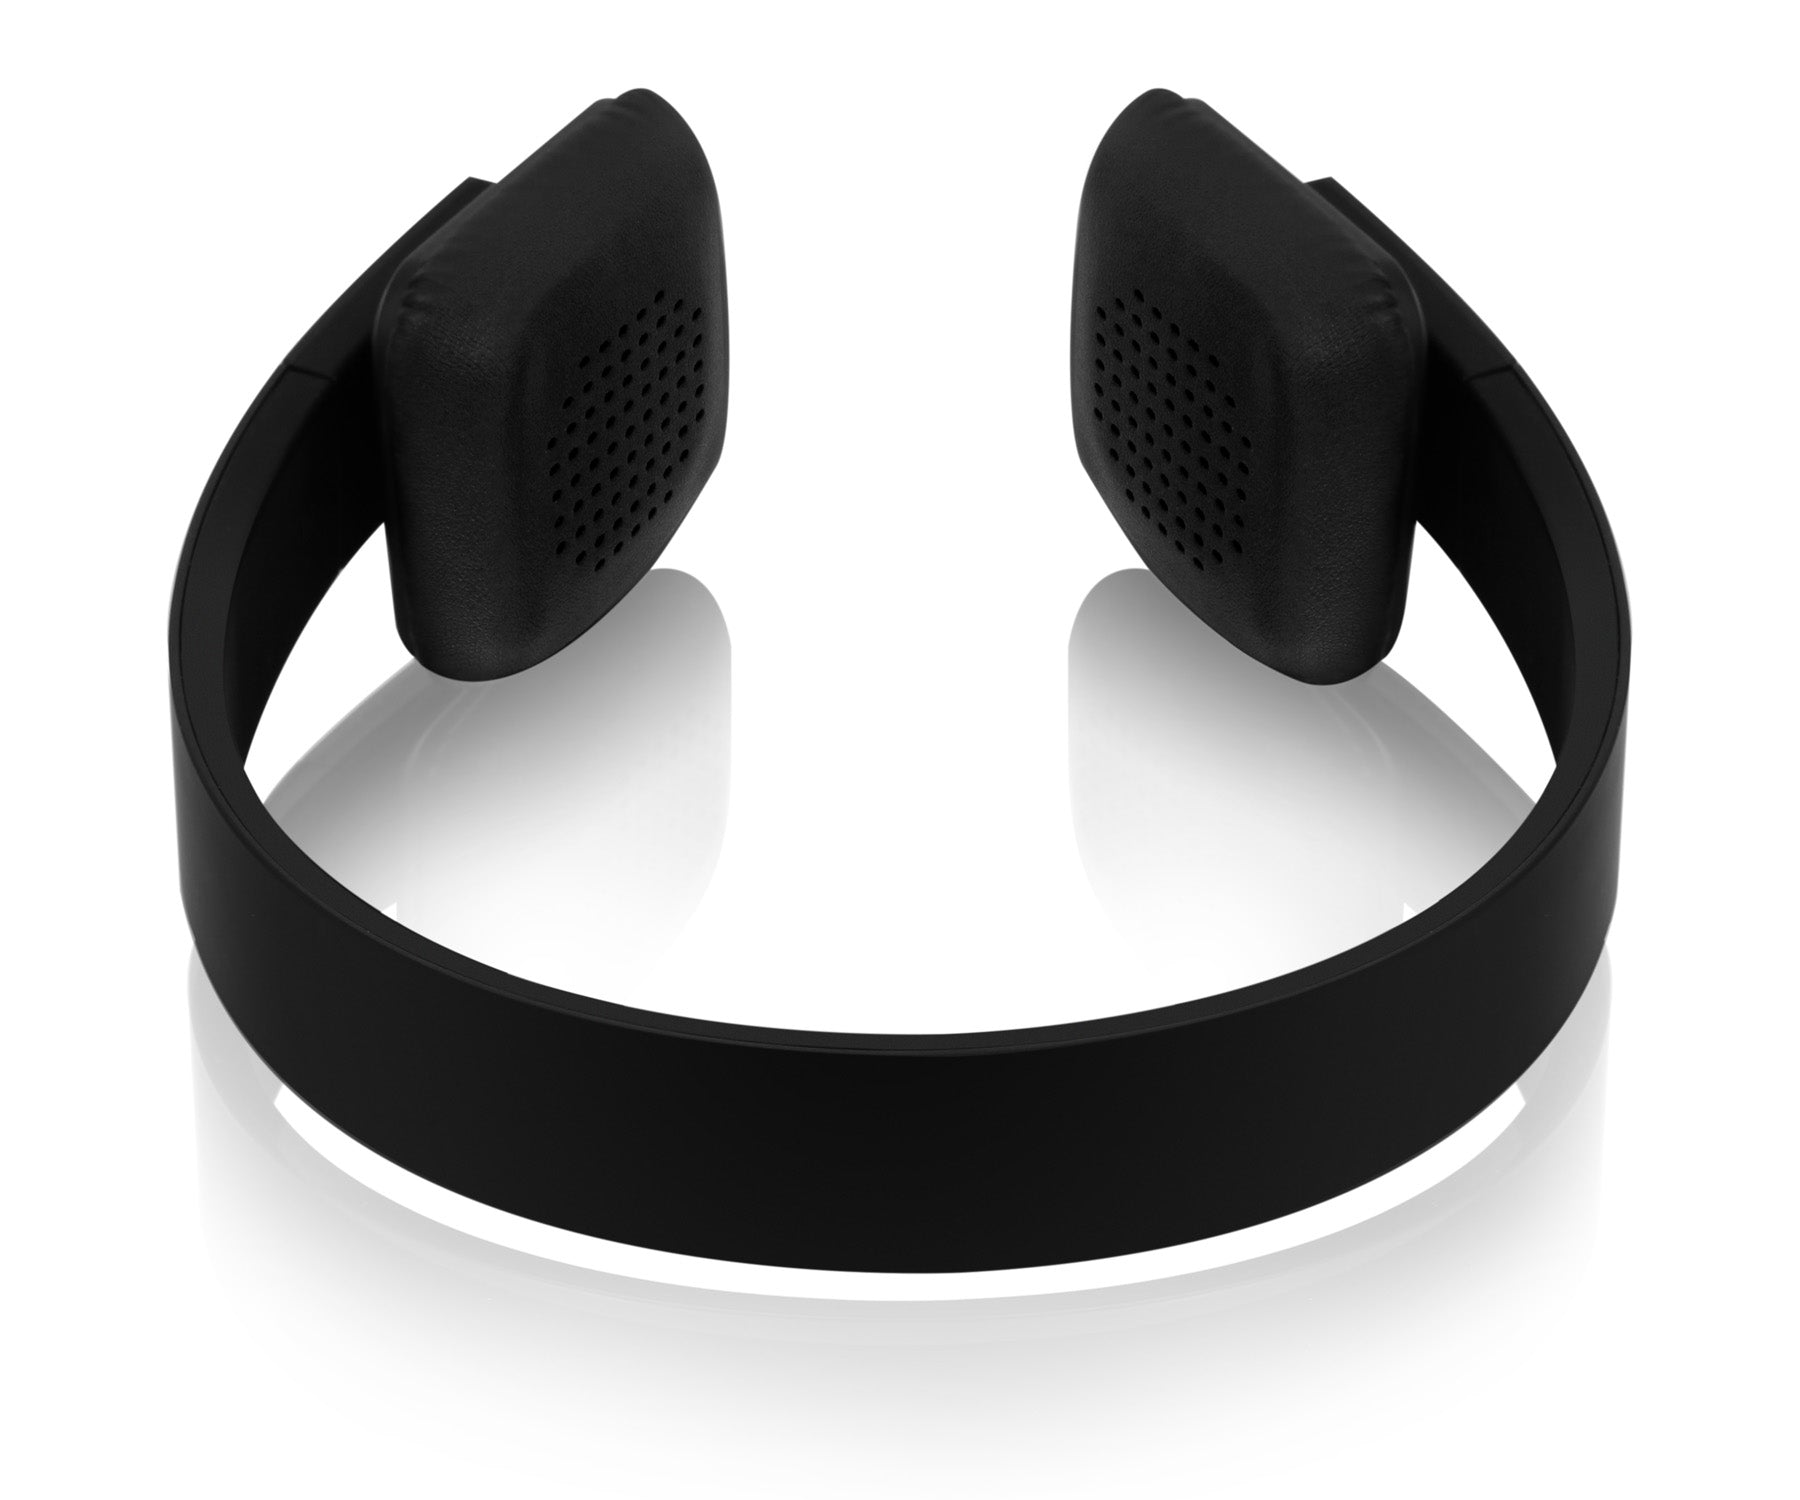 Bluetooth Wireless Stereo Headphones - Black